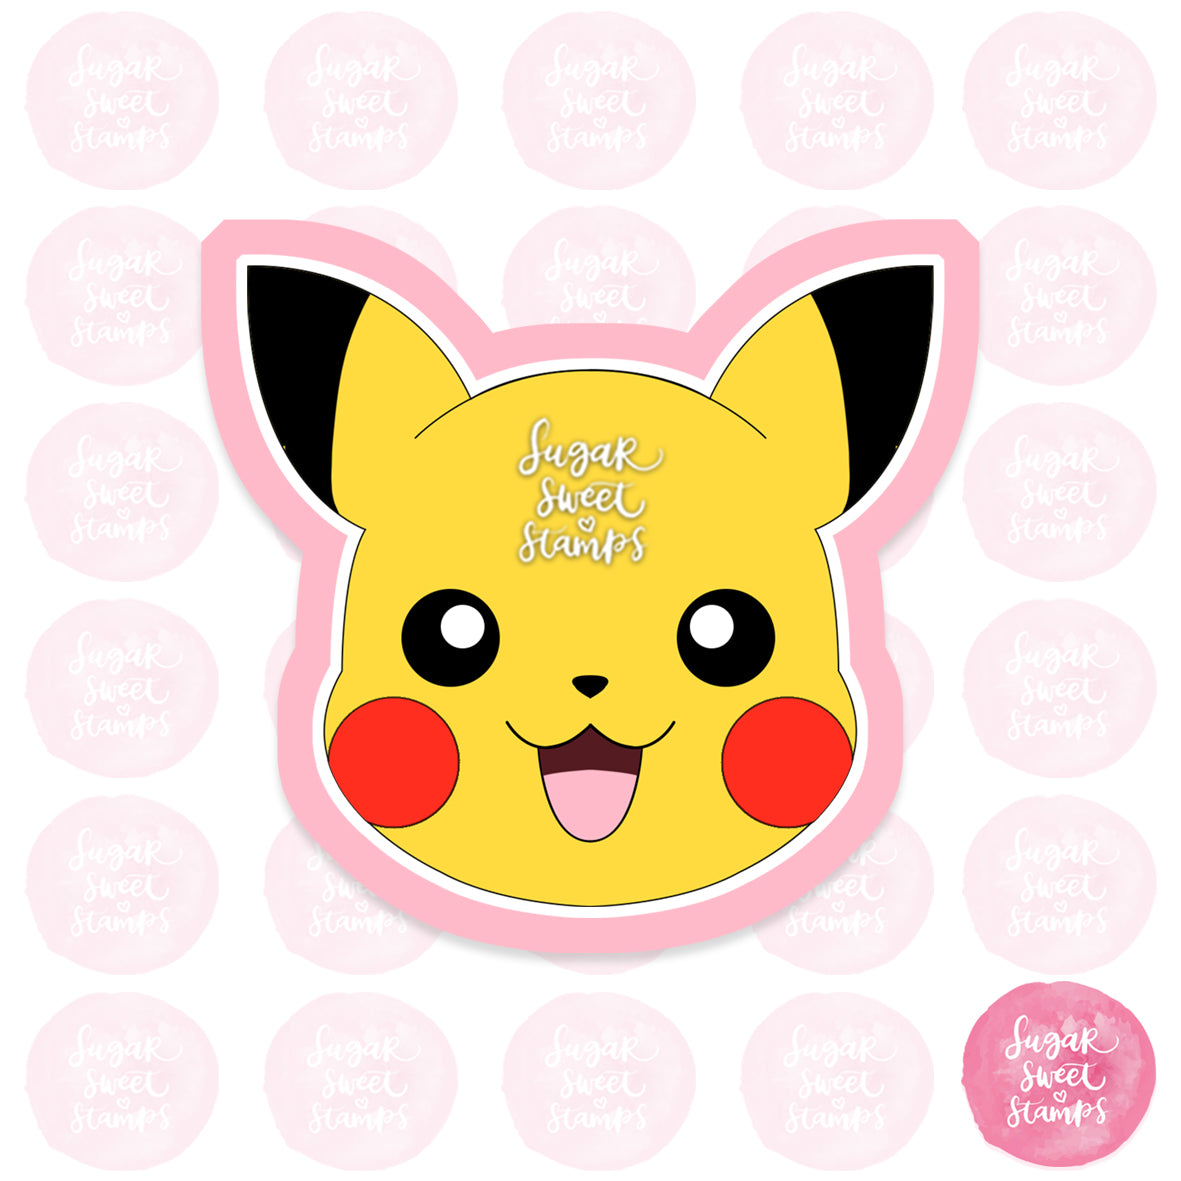 pokemon pikachu electric nintendo popular video game character custom 3d printed cookie cutter